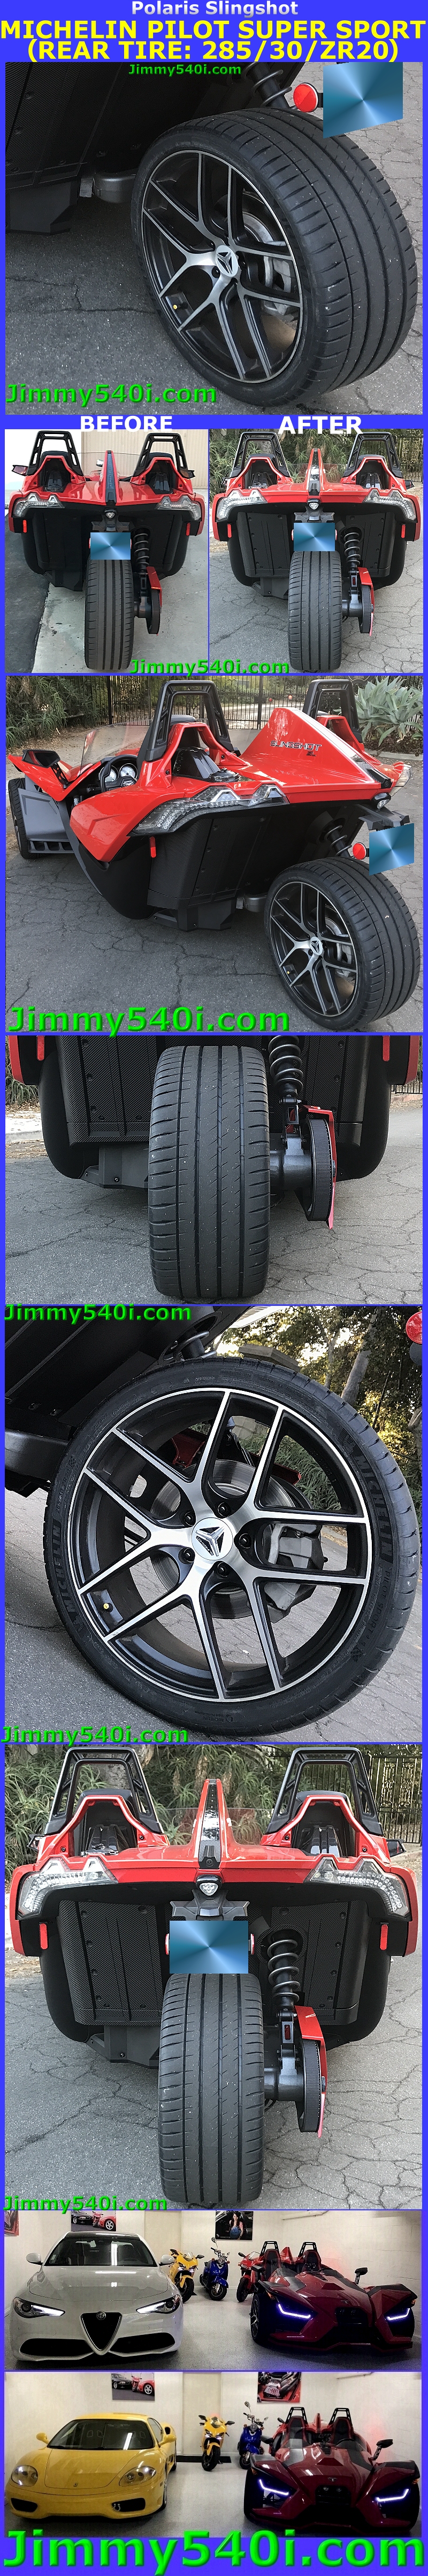 polaris_slingshot_rear_tire.jpg